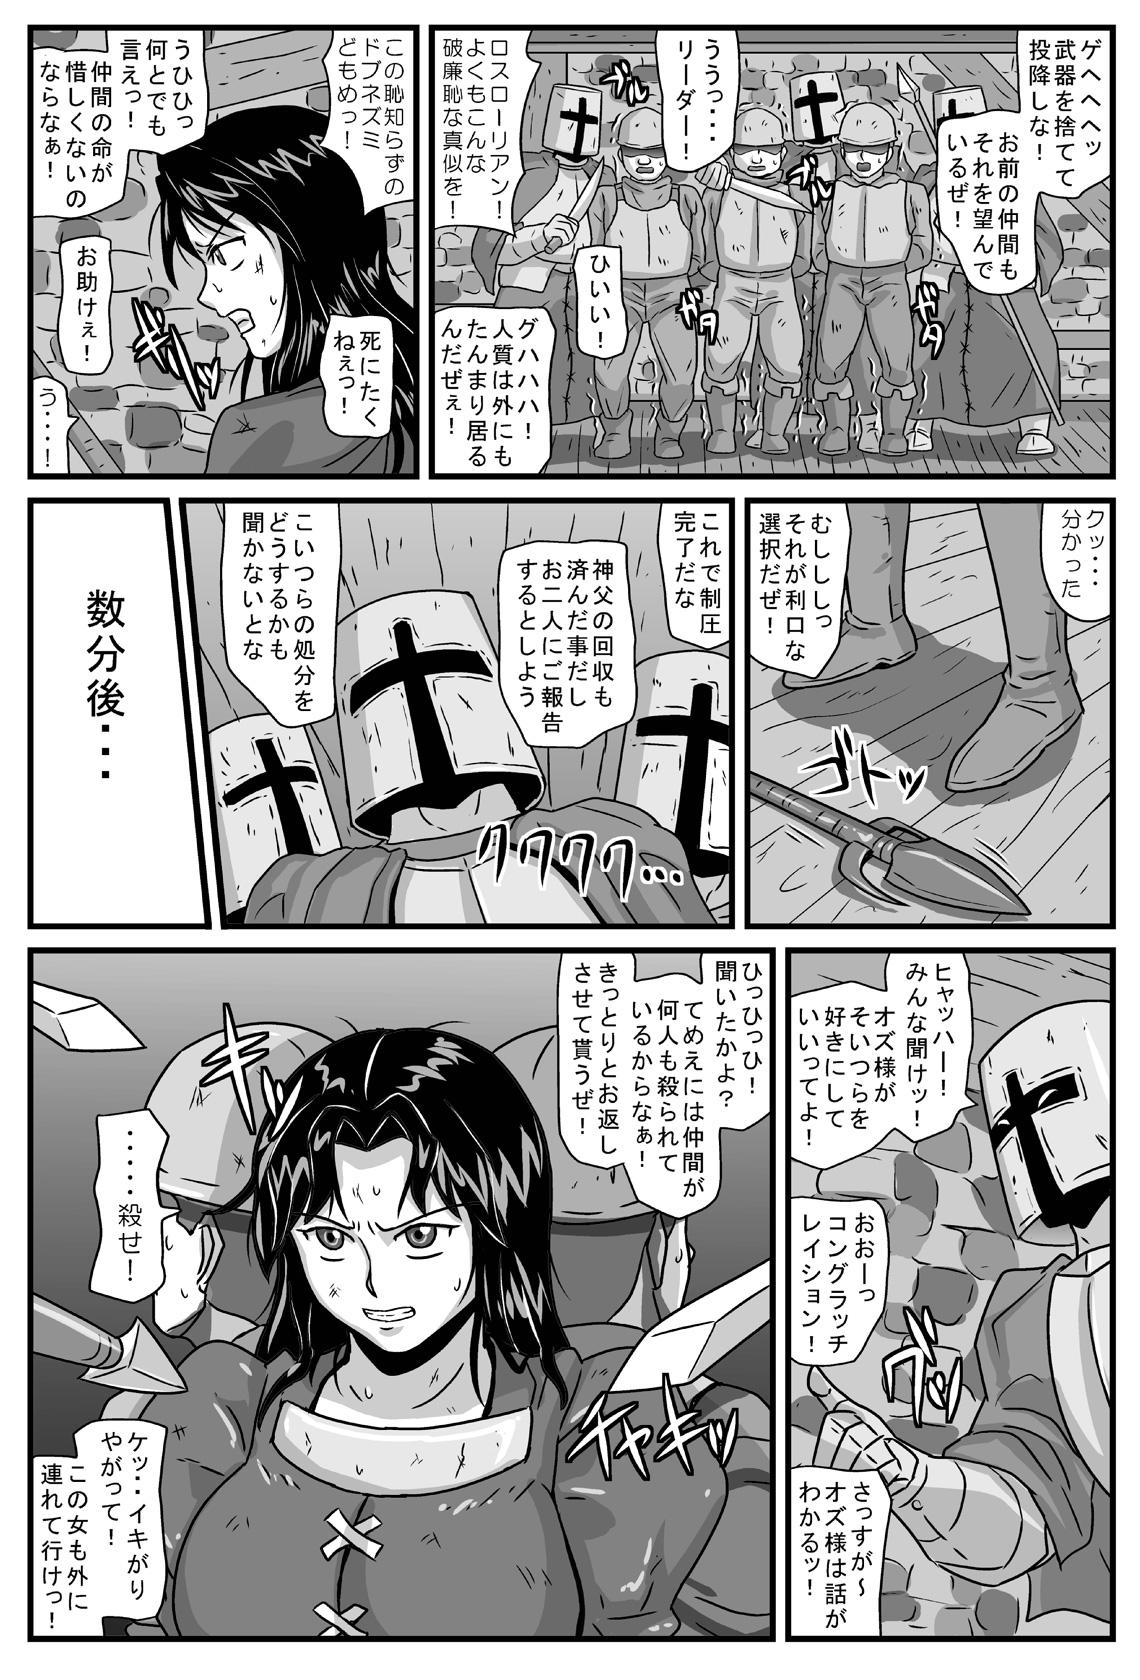 Caliente Guerrilla no Onna Leader wa Honoo no 26-sai Kurokami Shojo - Tactics ogre Milk - Page 3